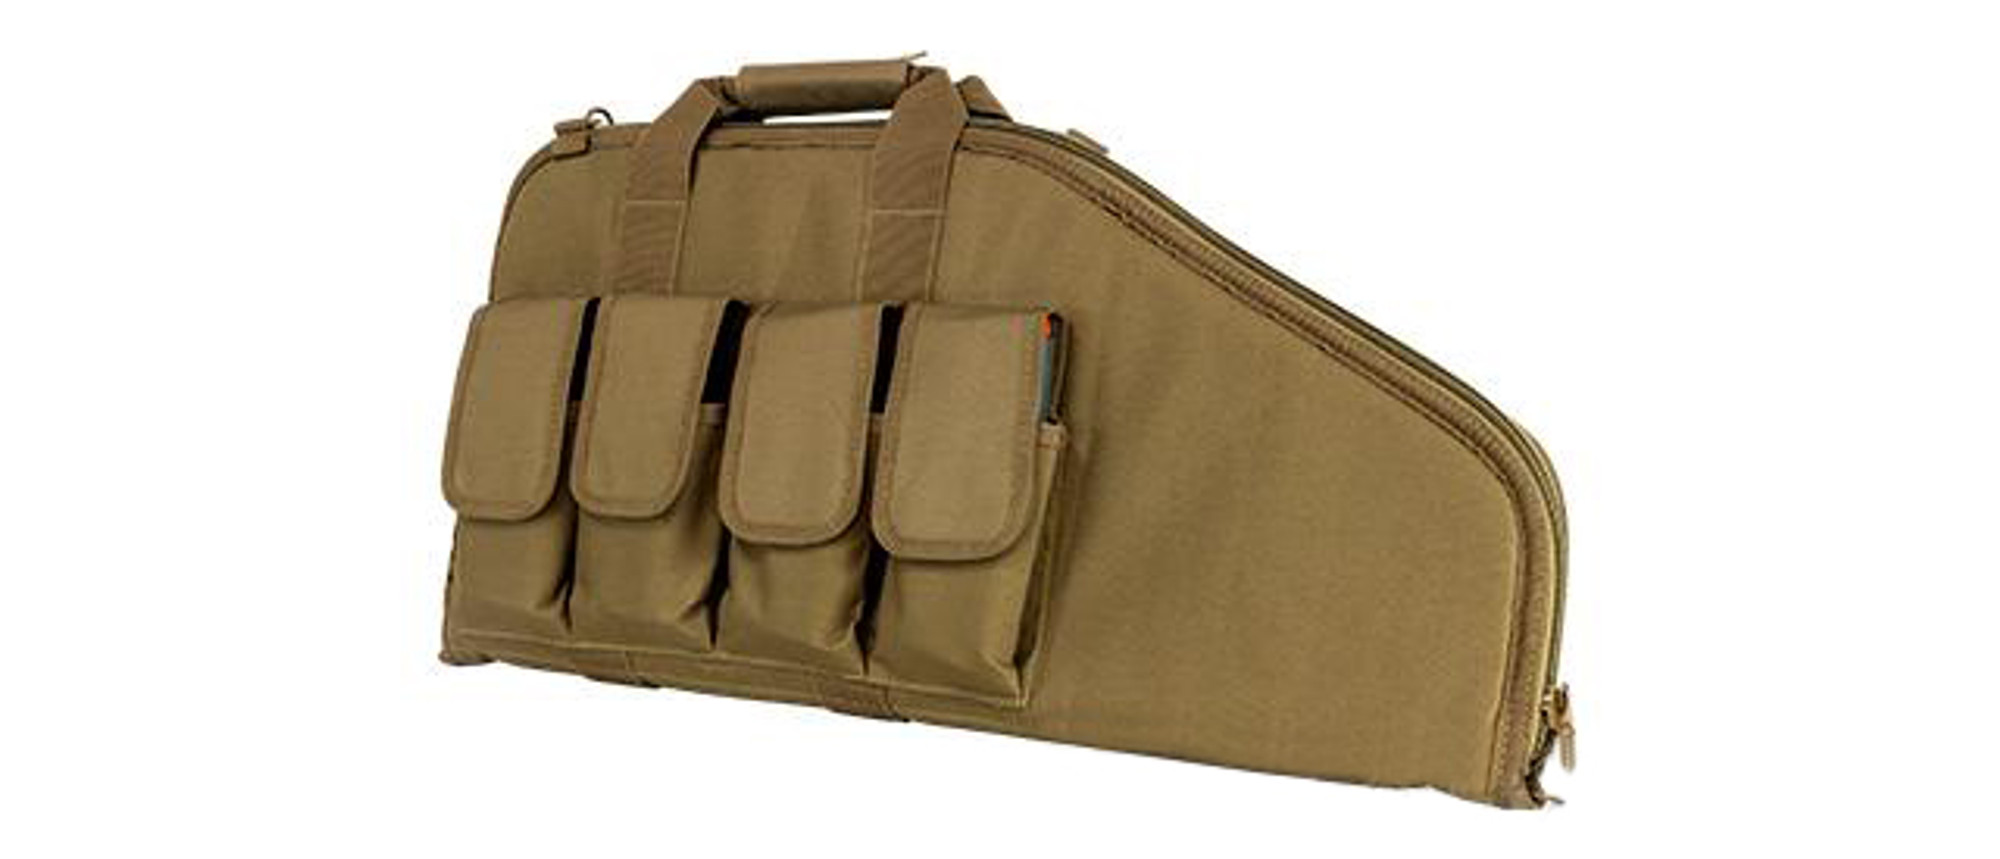 VISM / NcStar 28" Sub Machinegun / Pistol Carbine Length Nylon Gun Bag - Tan